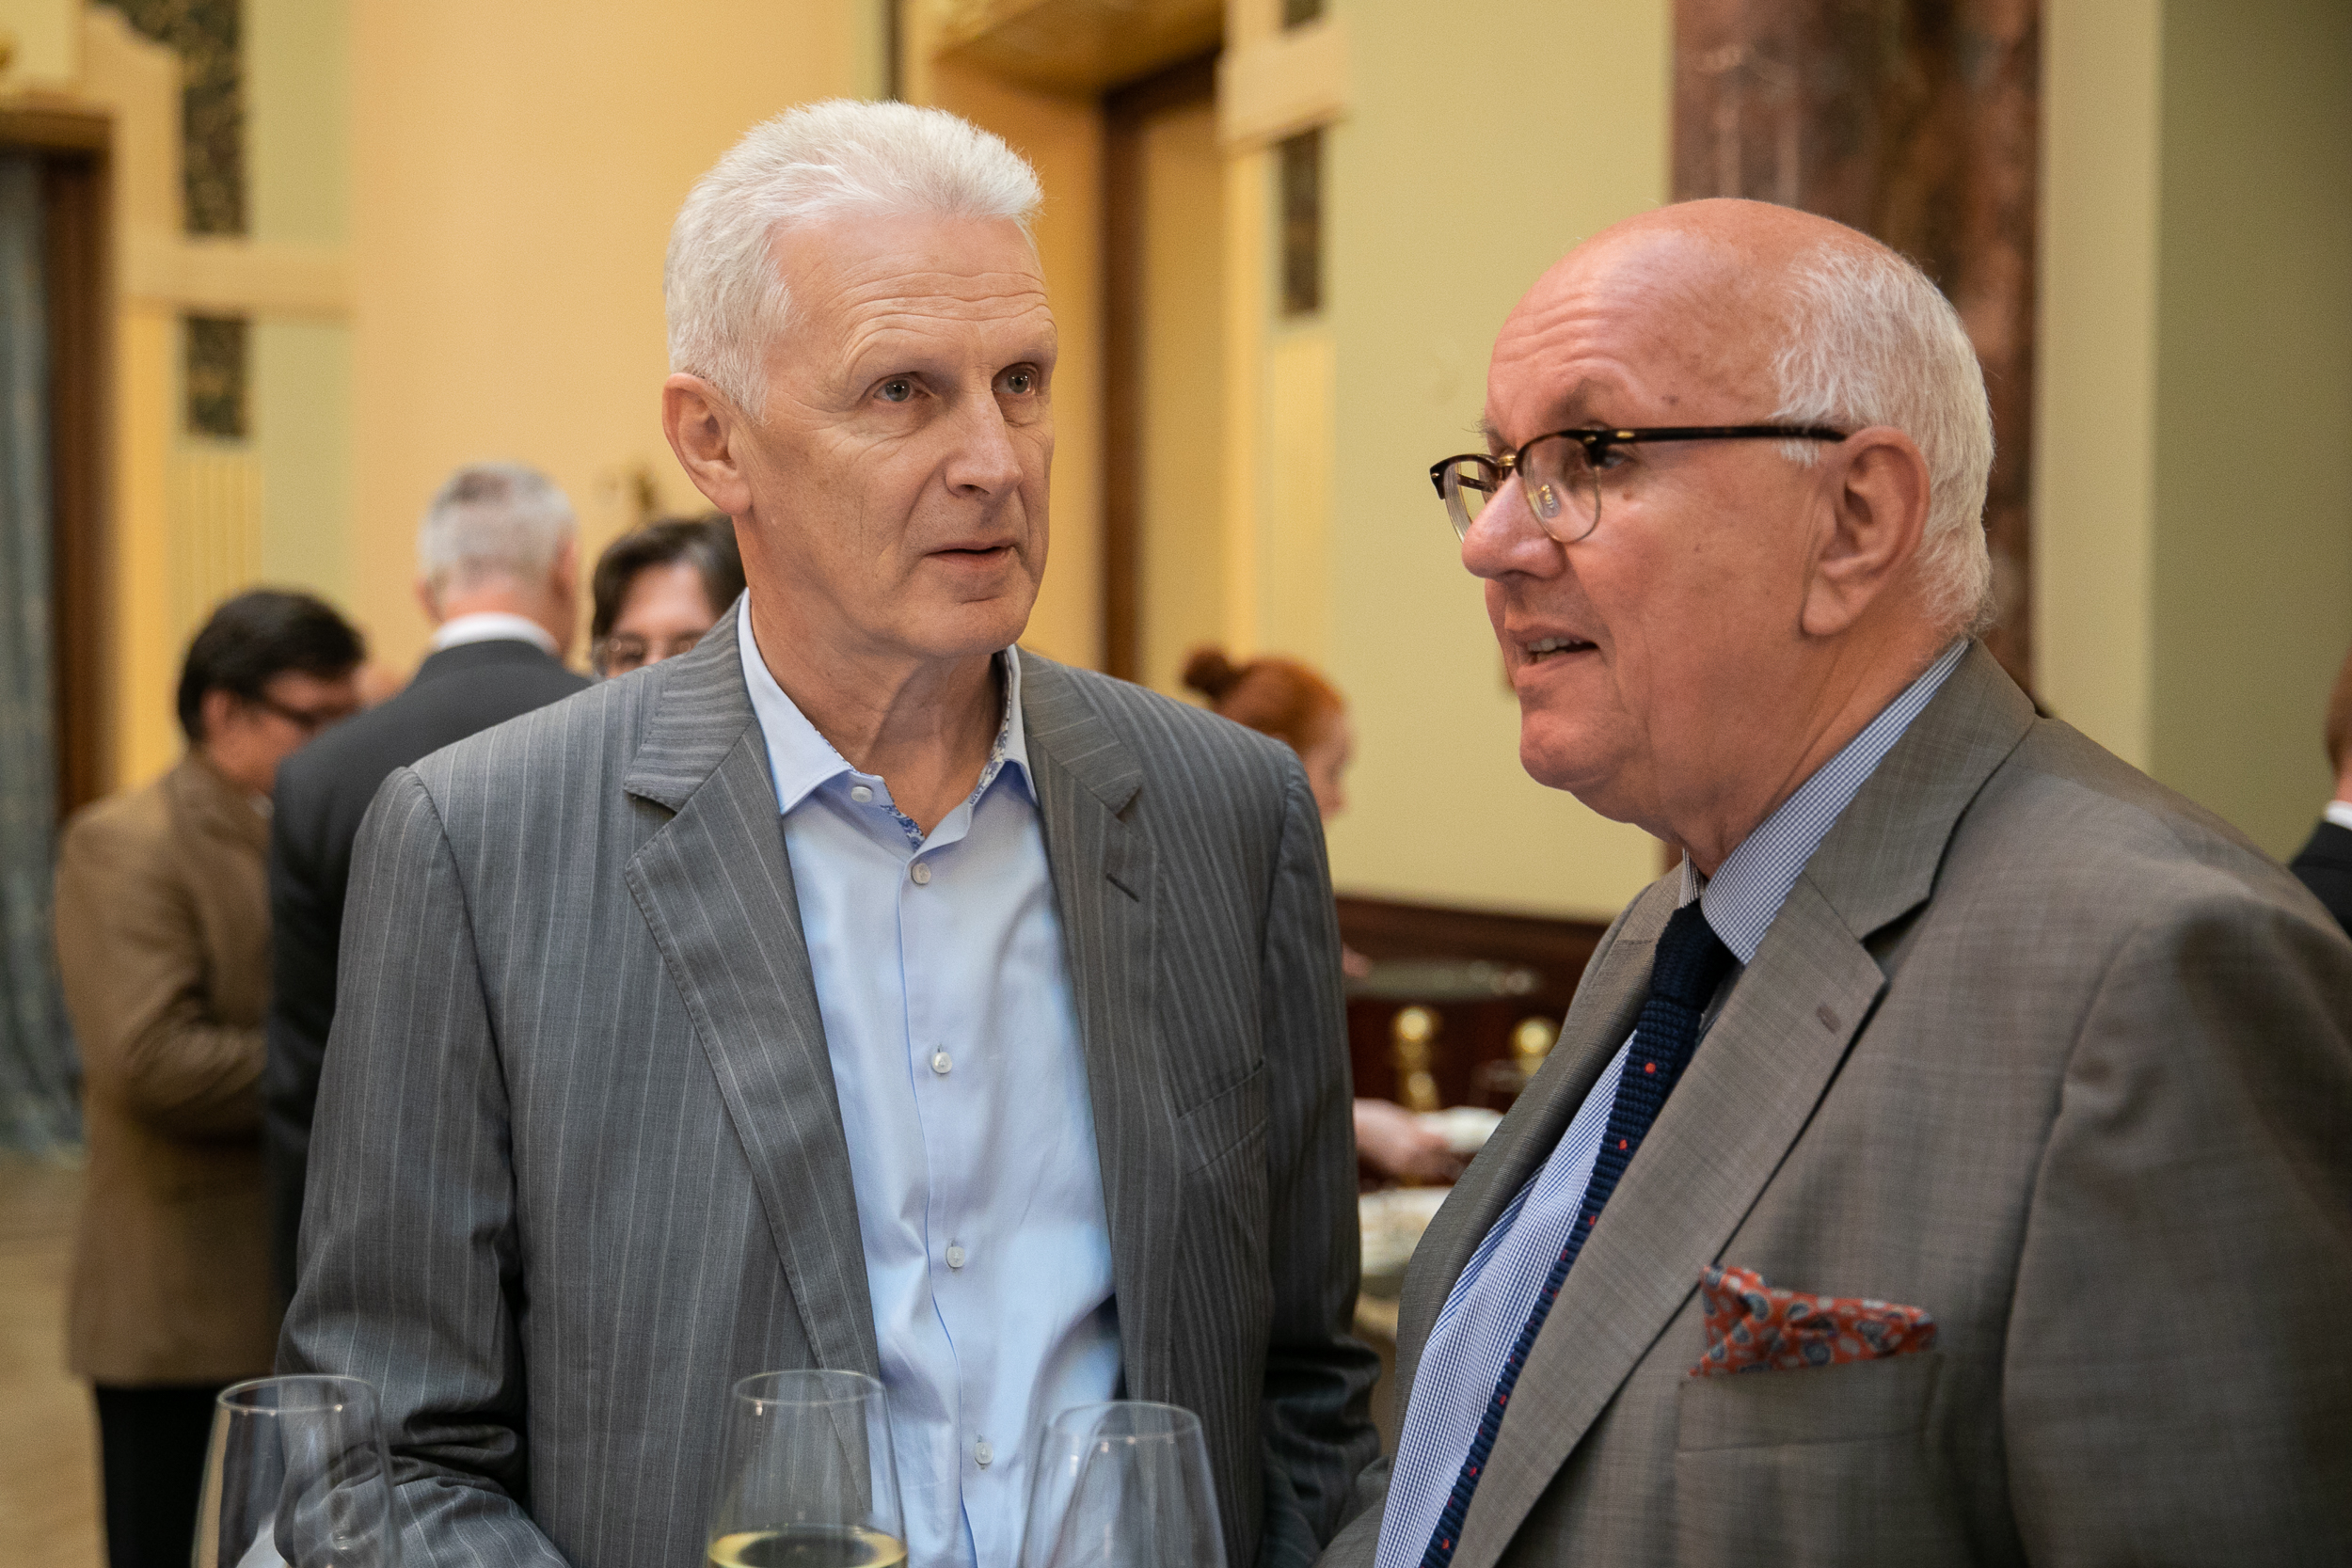 DFG President Strohschneider and Advisor Fursenko in conversation